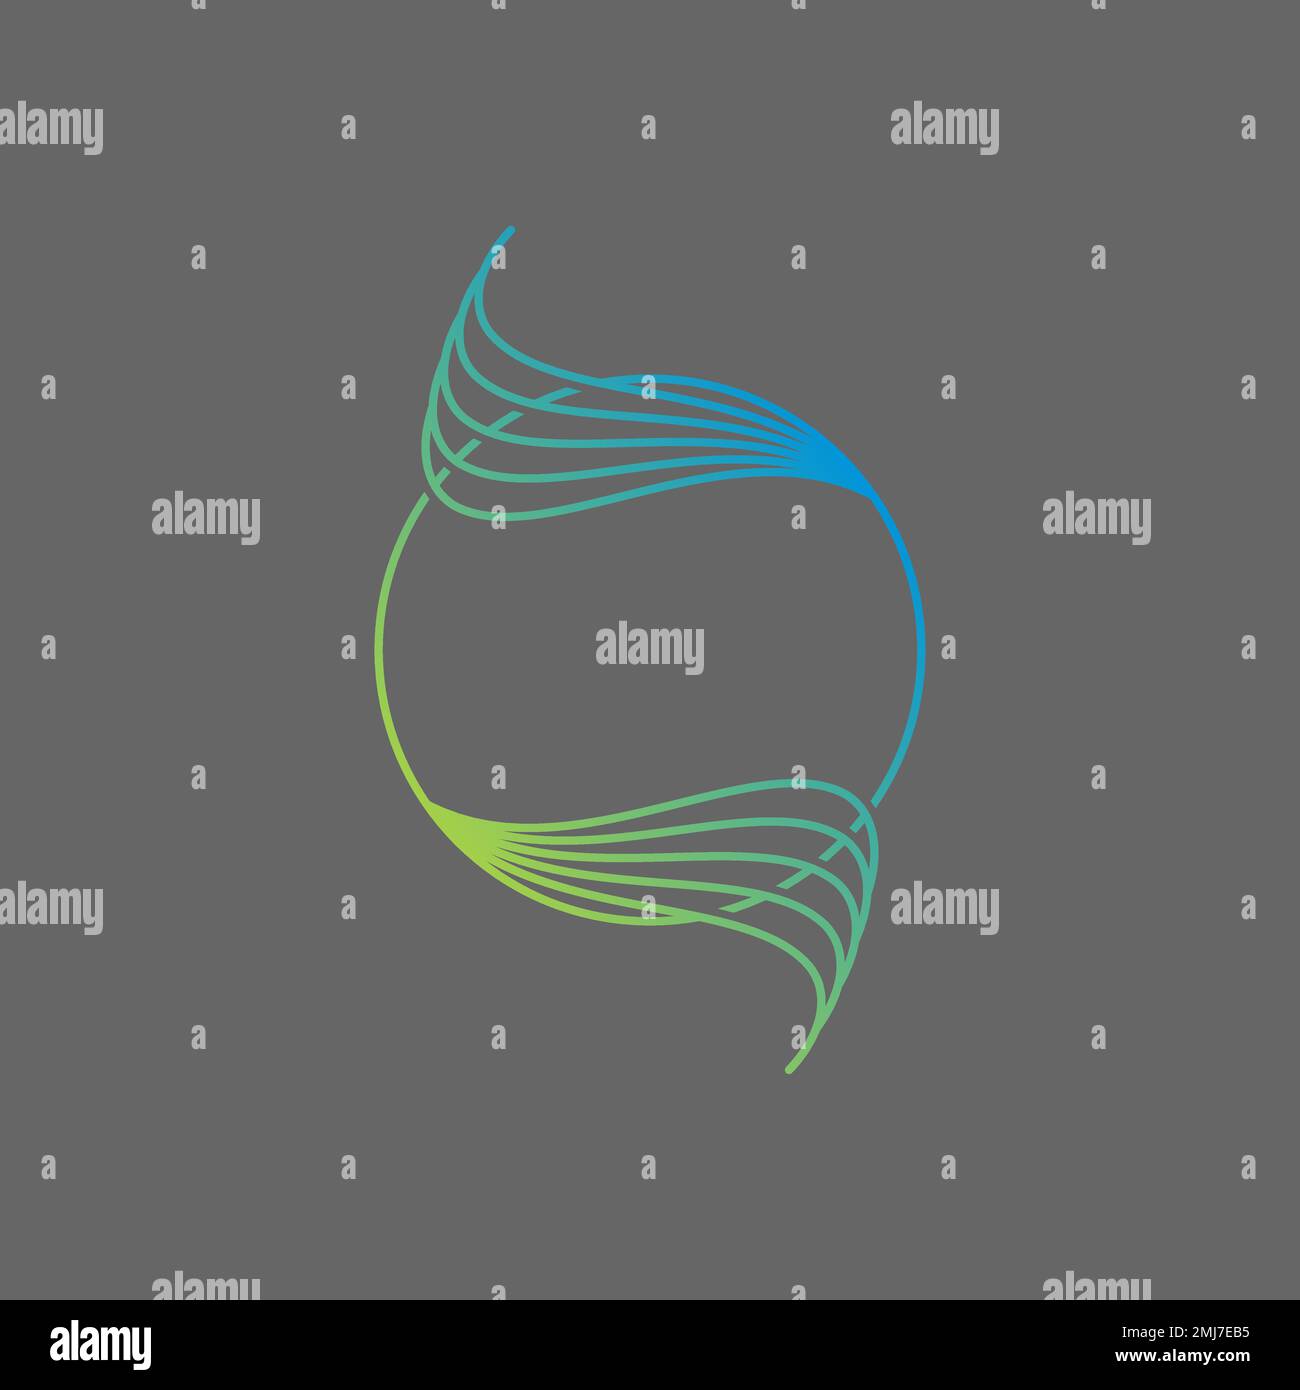 Einfache und einzigartige Reflexionslinien attraktiver Klang Klang Klang Wellen Kreis Grafik Symbol Logo Design abstraktes Konzept Vector Stock Art Musik Stock Vektor